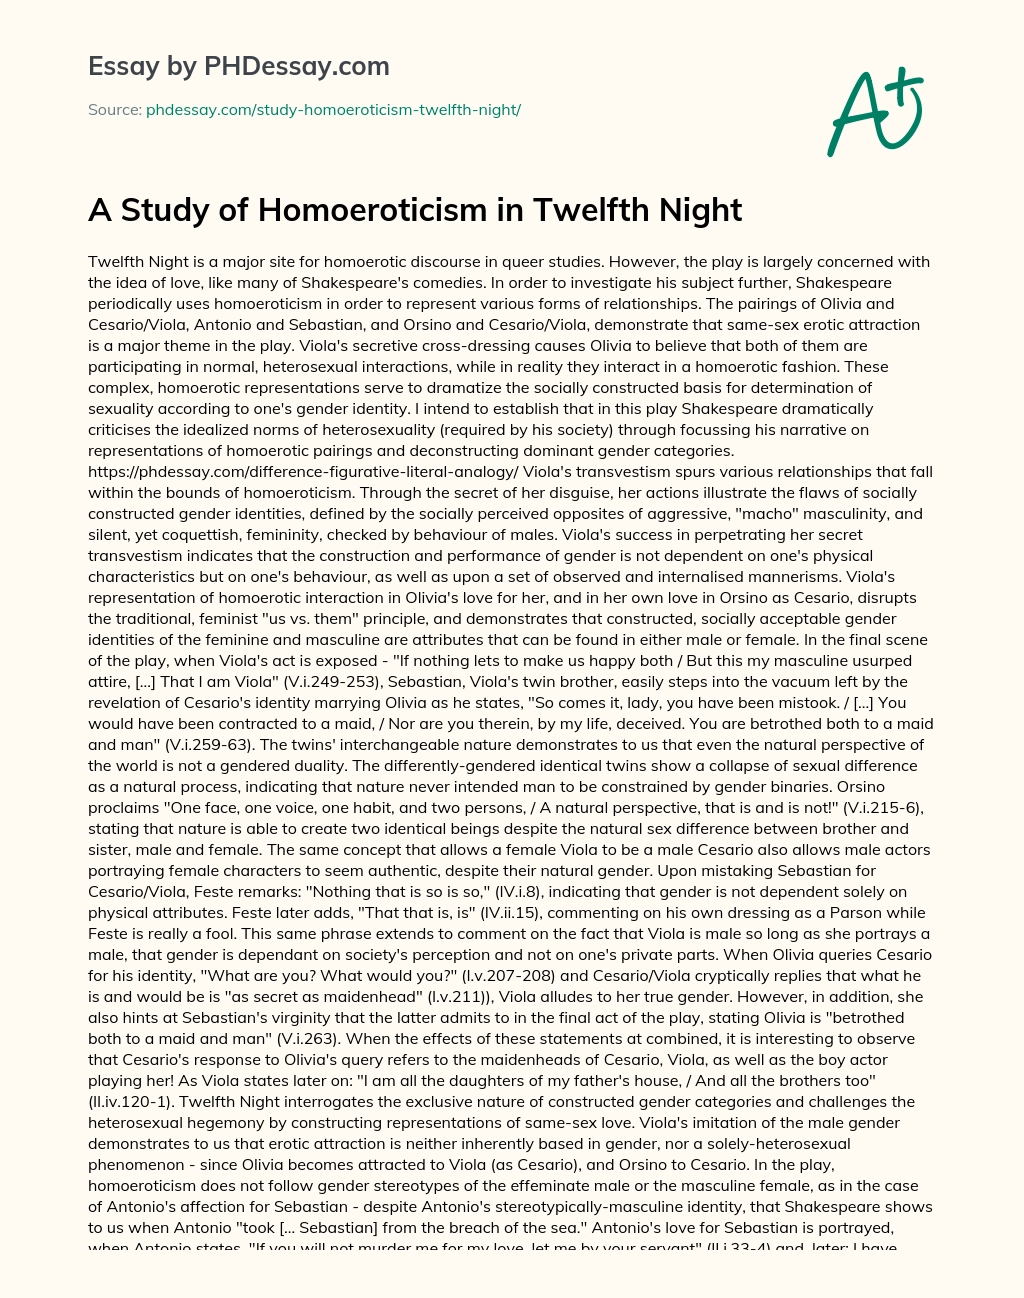 A Study of Homoeroticism in Twelfth Night essay